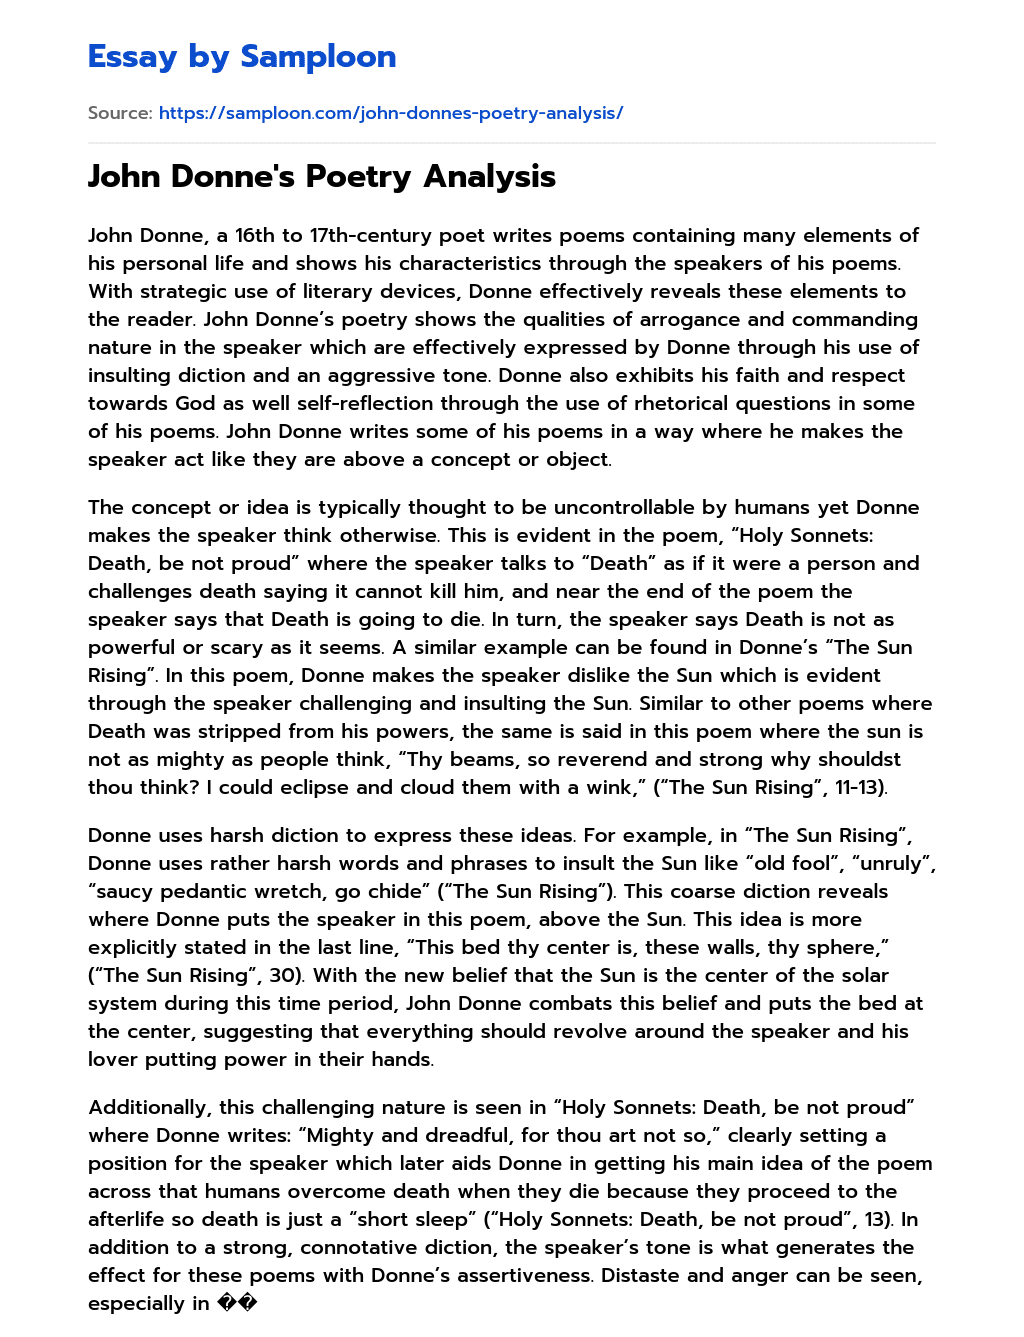 John Donne’s Poetry Analysis essay